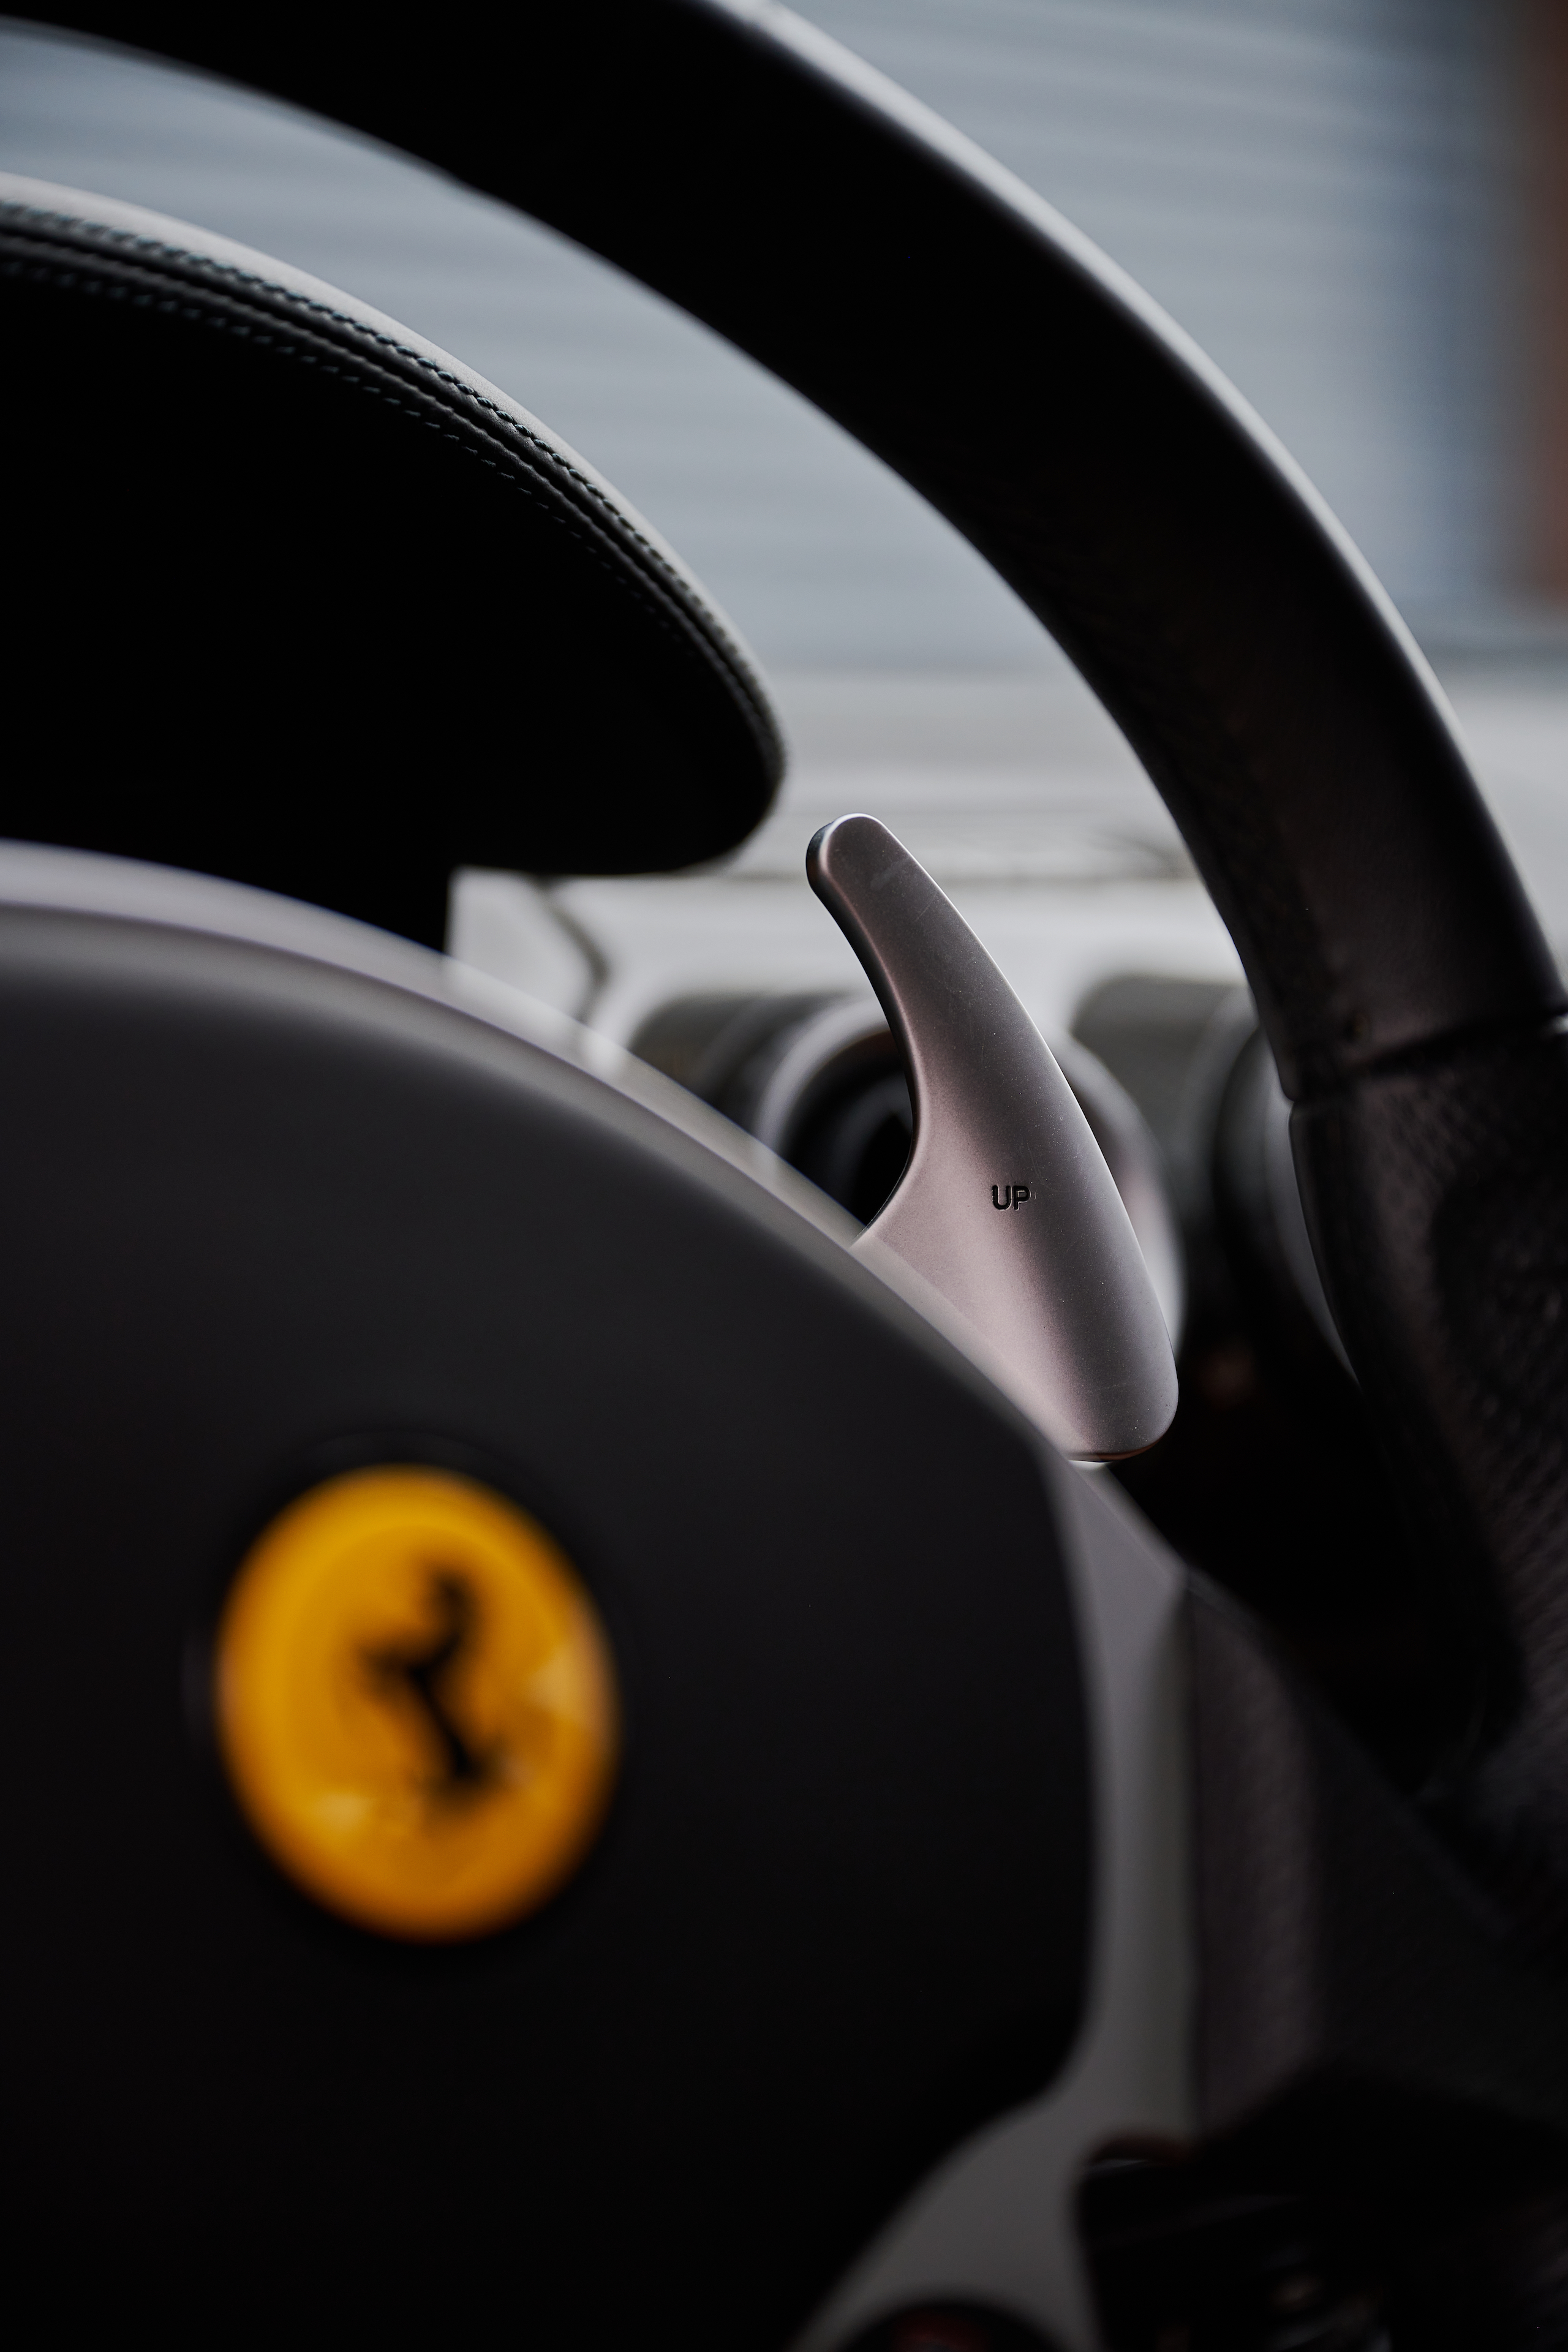 Hagerty "Shift Happens" Key Rings Manual transmission Ferrari Porsche 6 speed